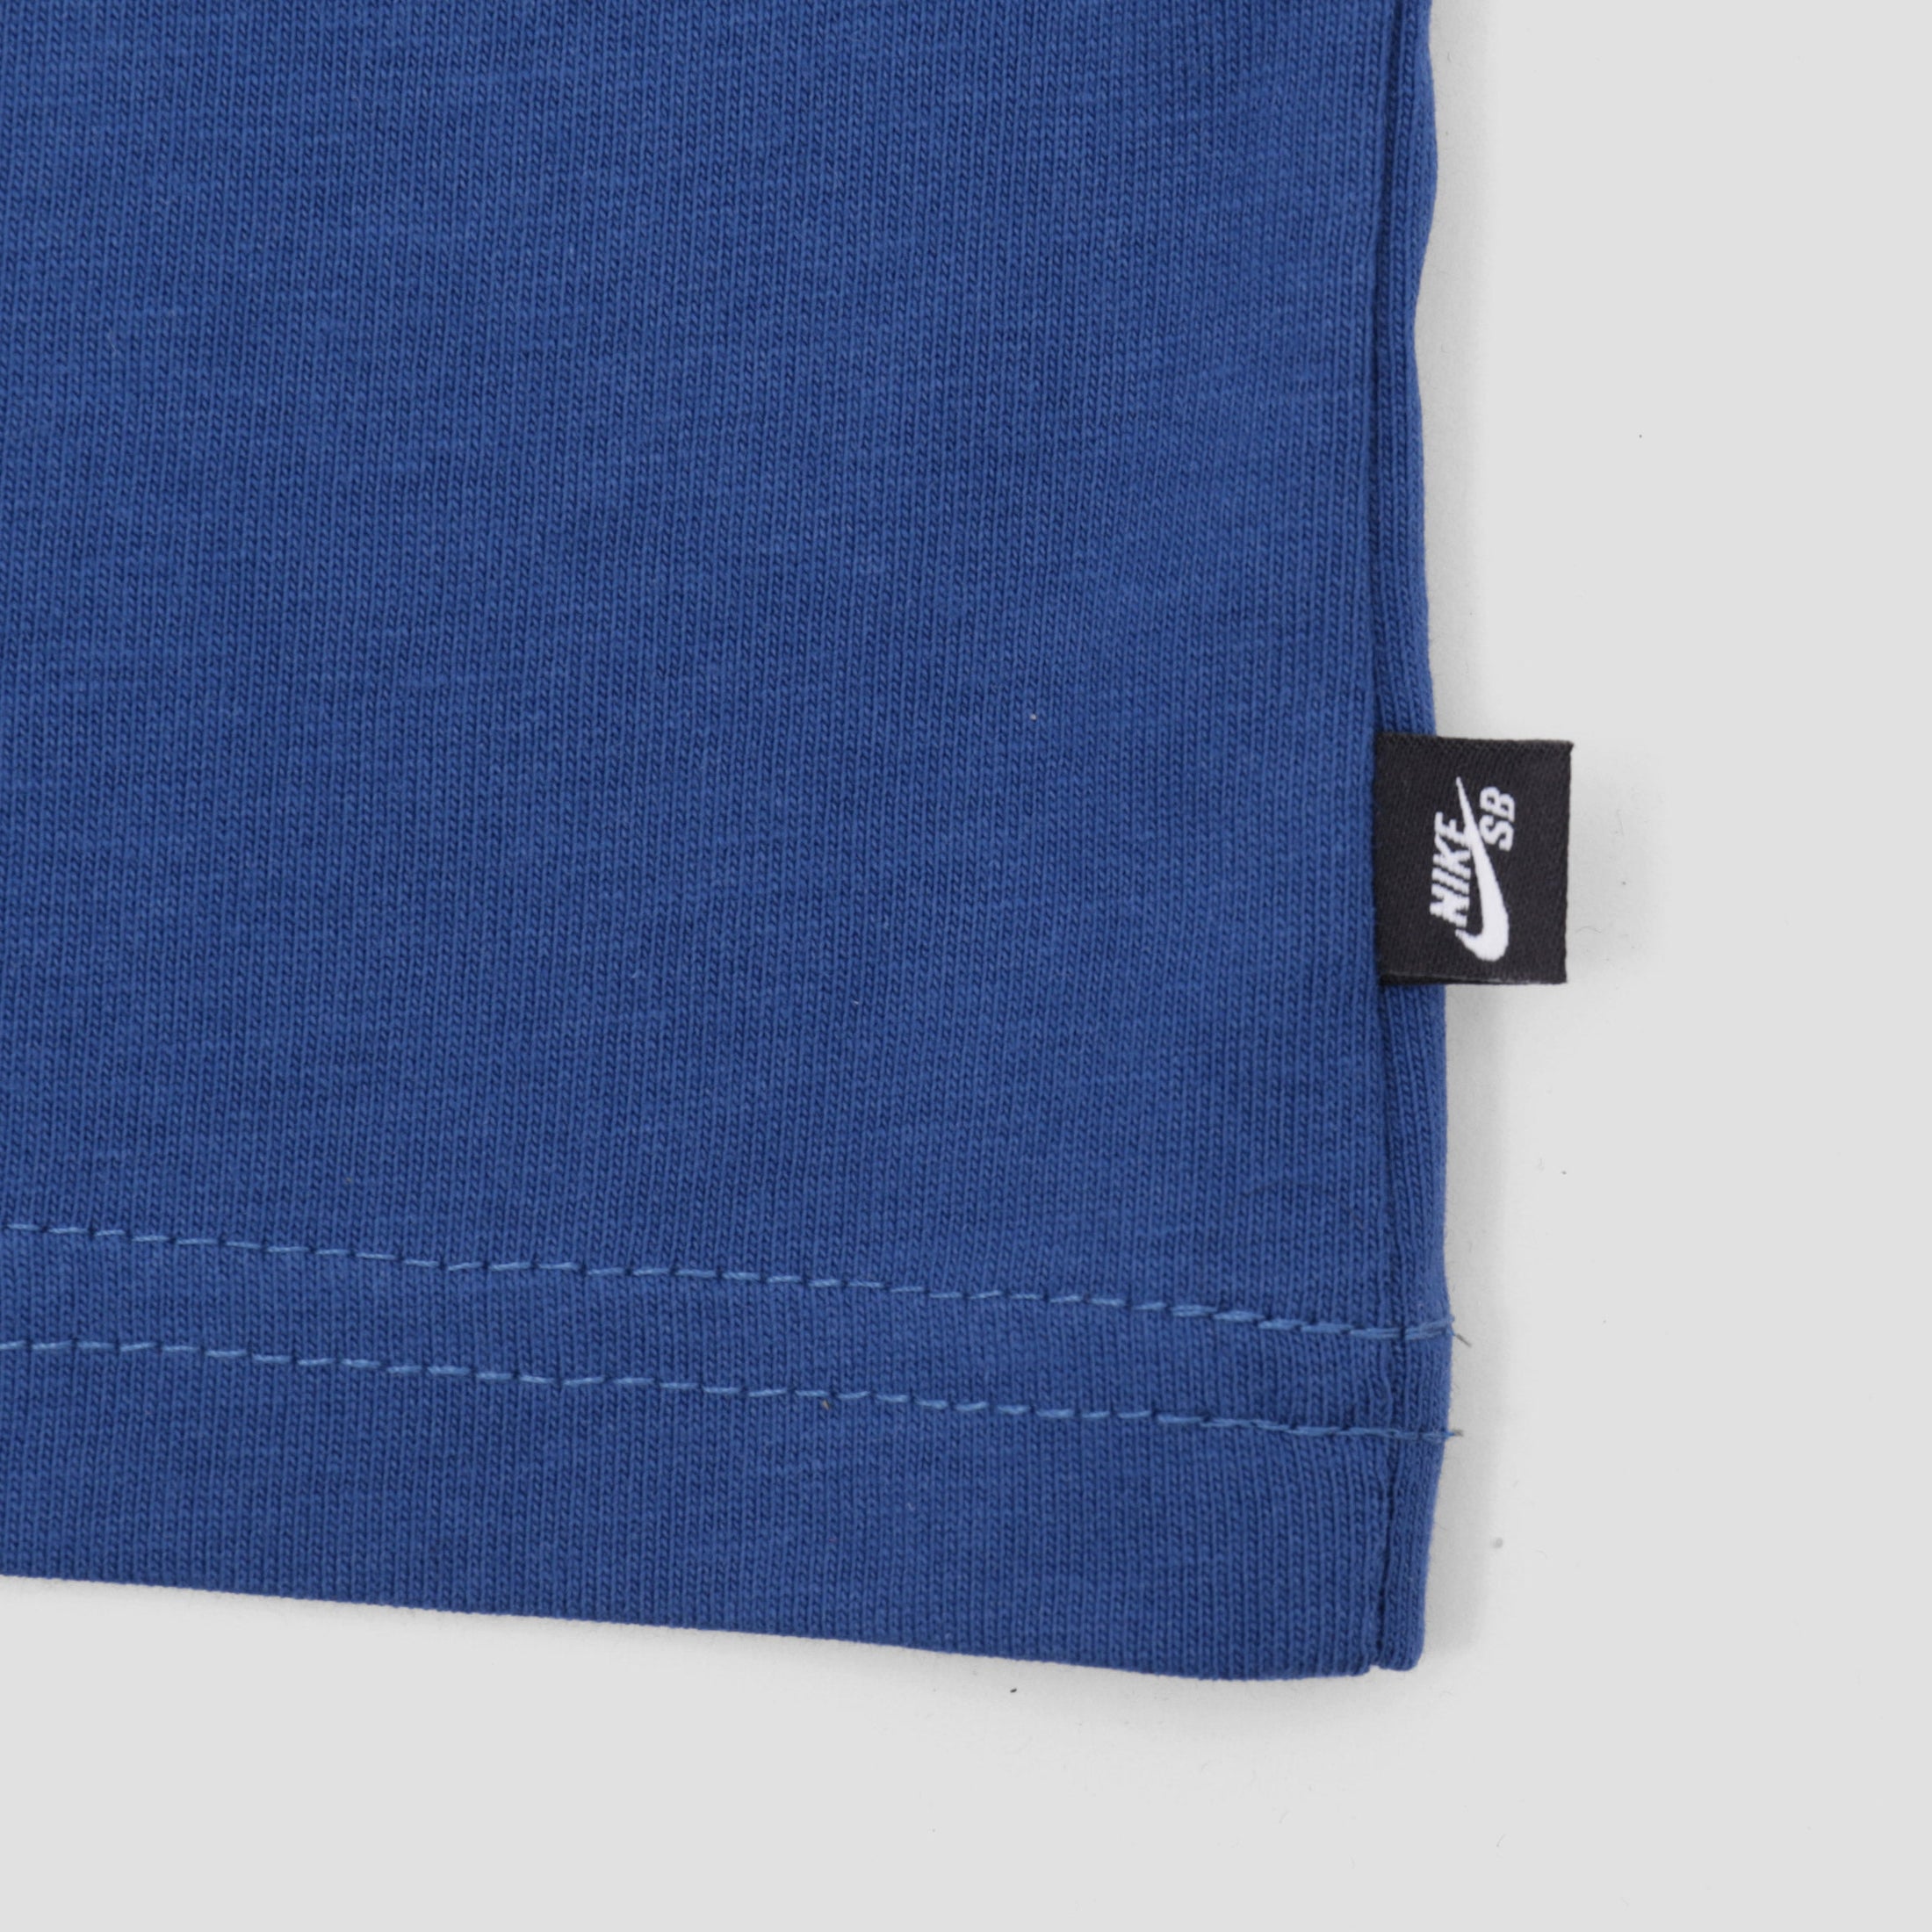 Nike SB Leopard T-Shirt Court Blue